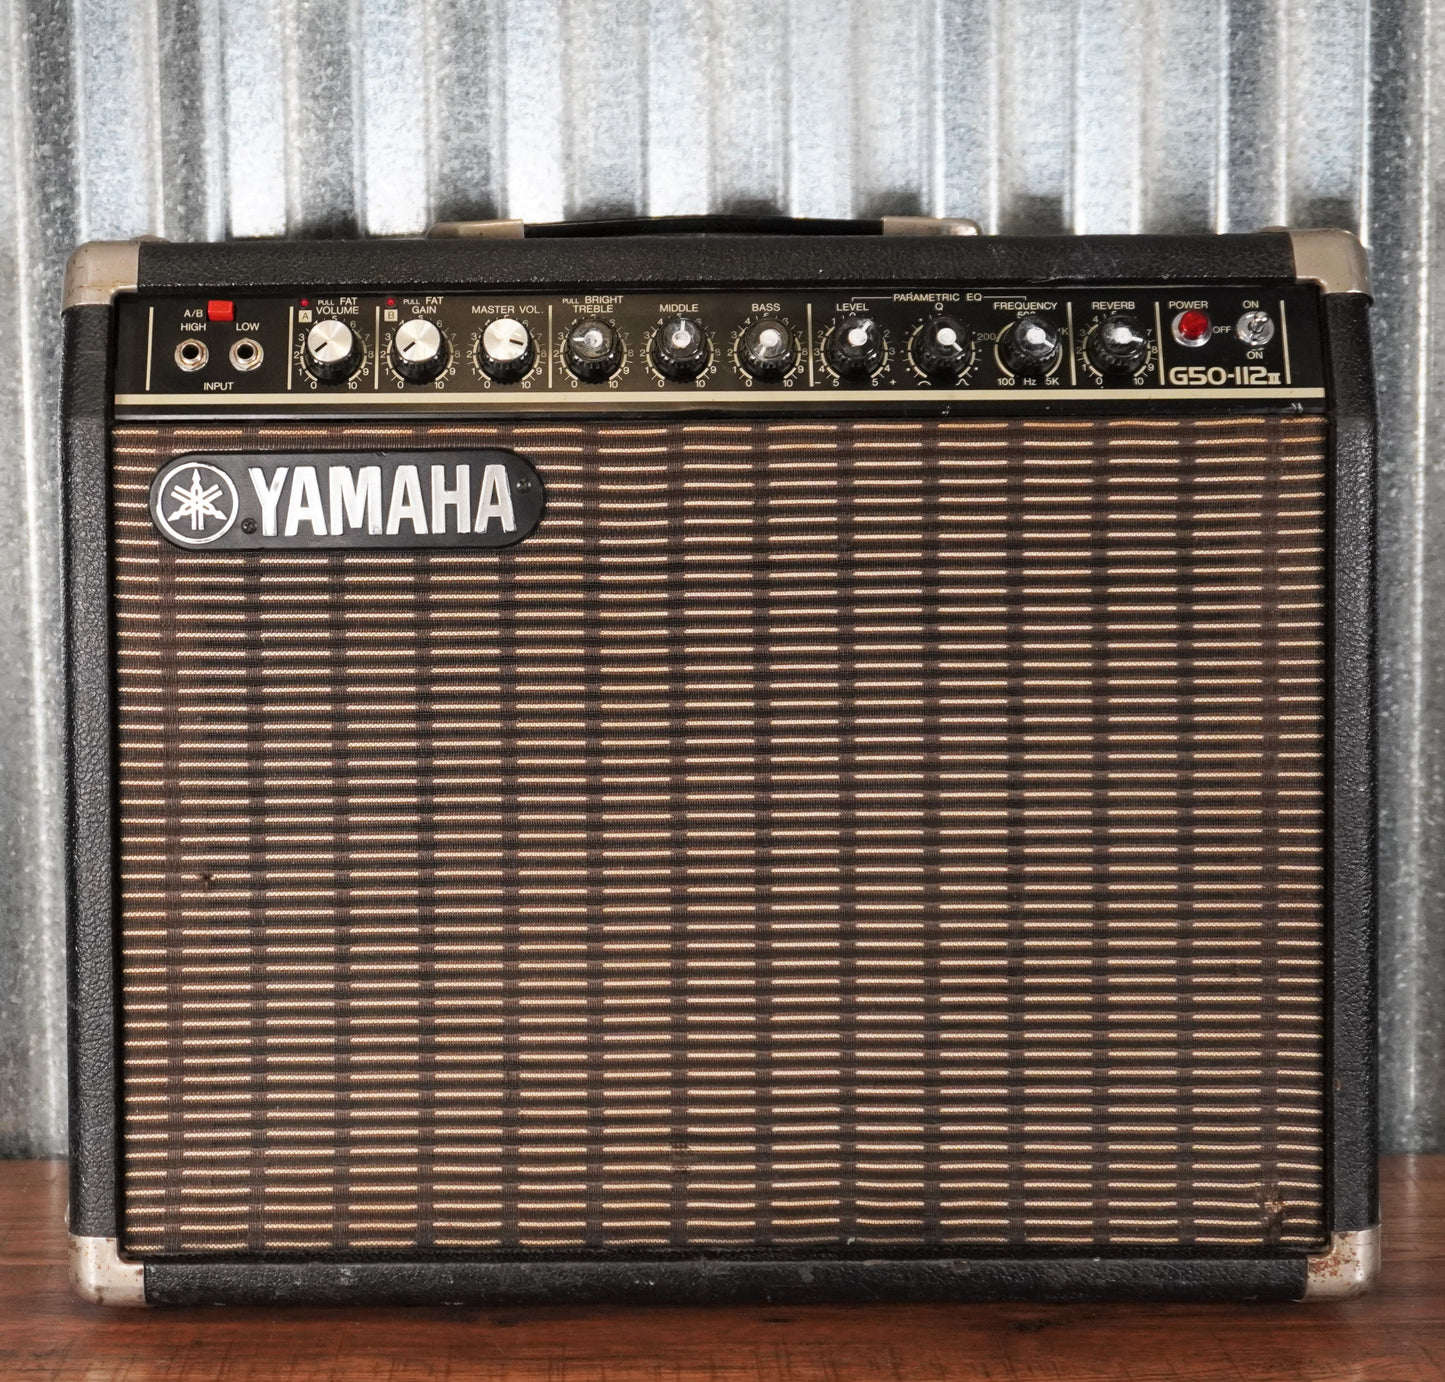 Yamaha G50-112 II Vintage 50 Watt 1x12" Two Channel Guitar Combo Amplifier Used